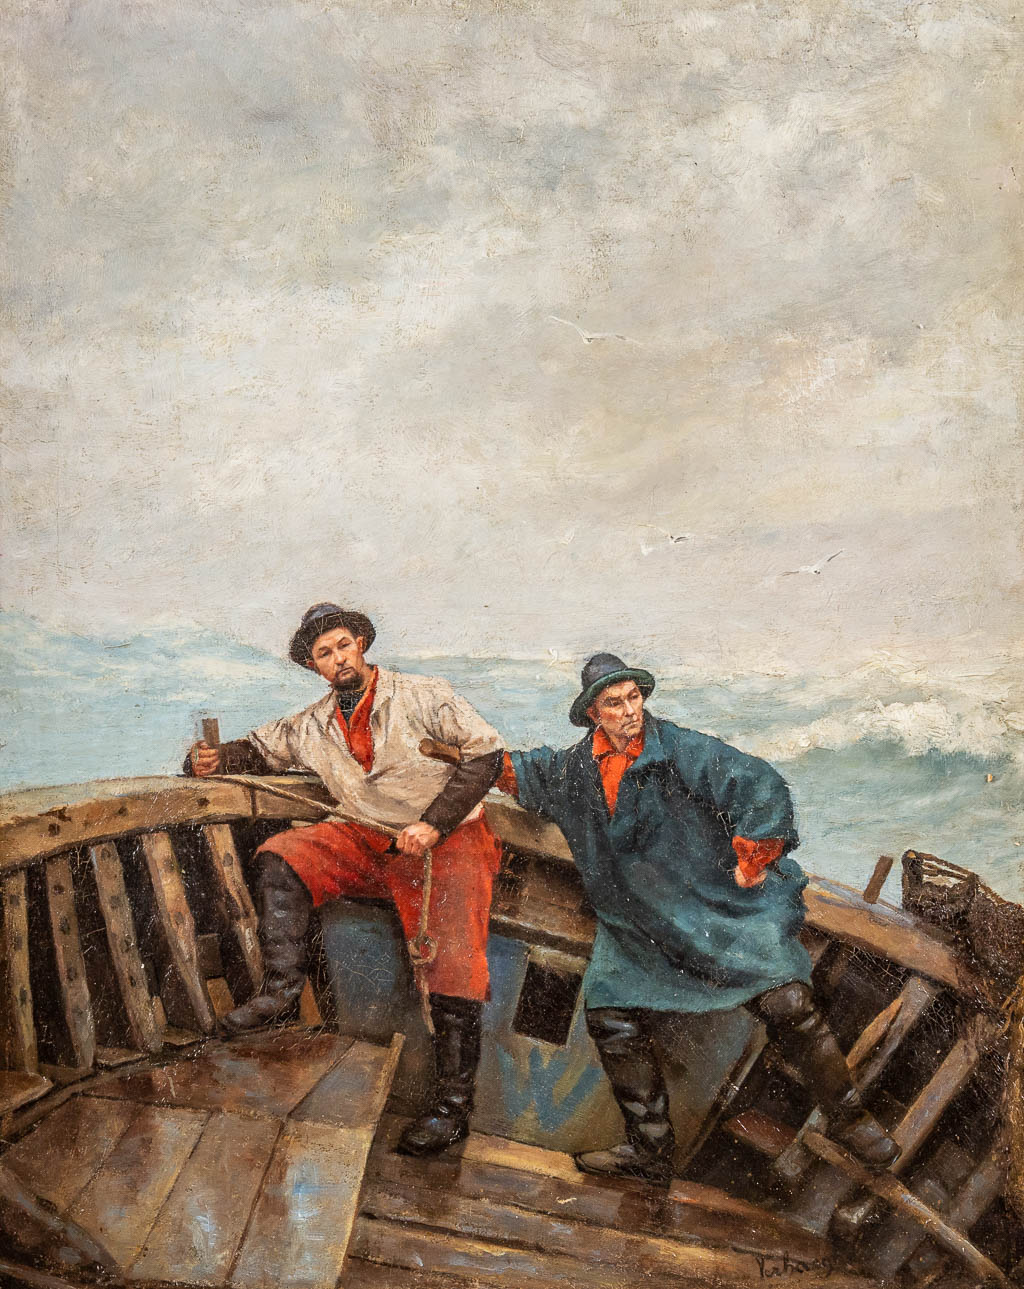 Alexander VERHAEGHE (1854-1904) 'Fishermen' oil on canvas. (W:53 x H:66 cm)